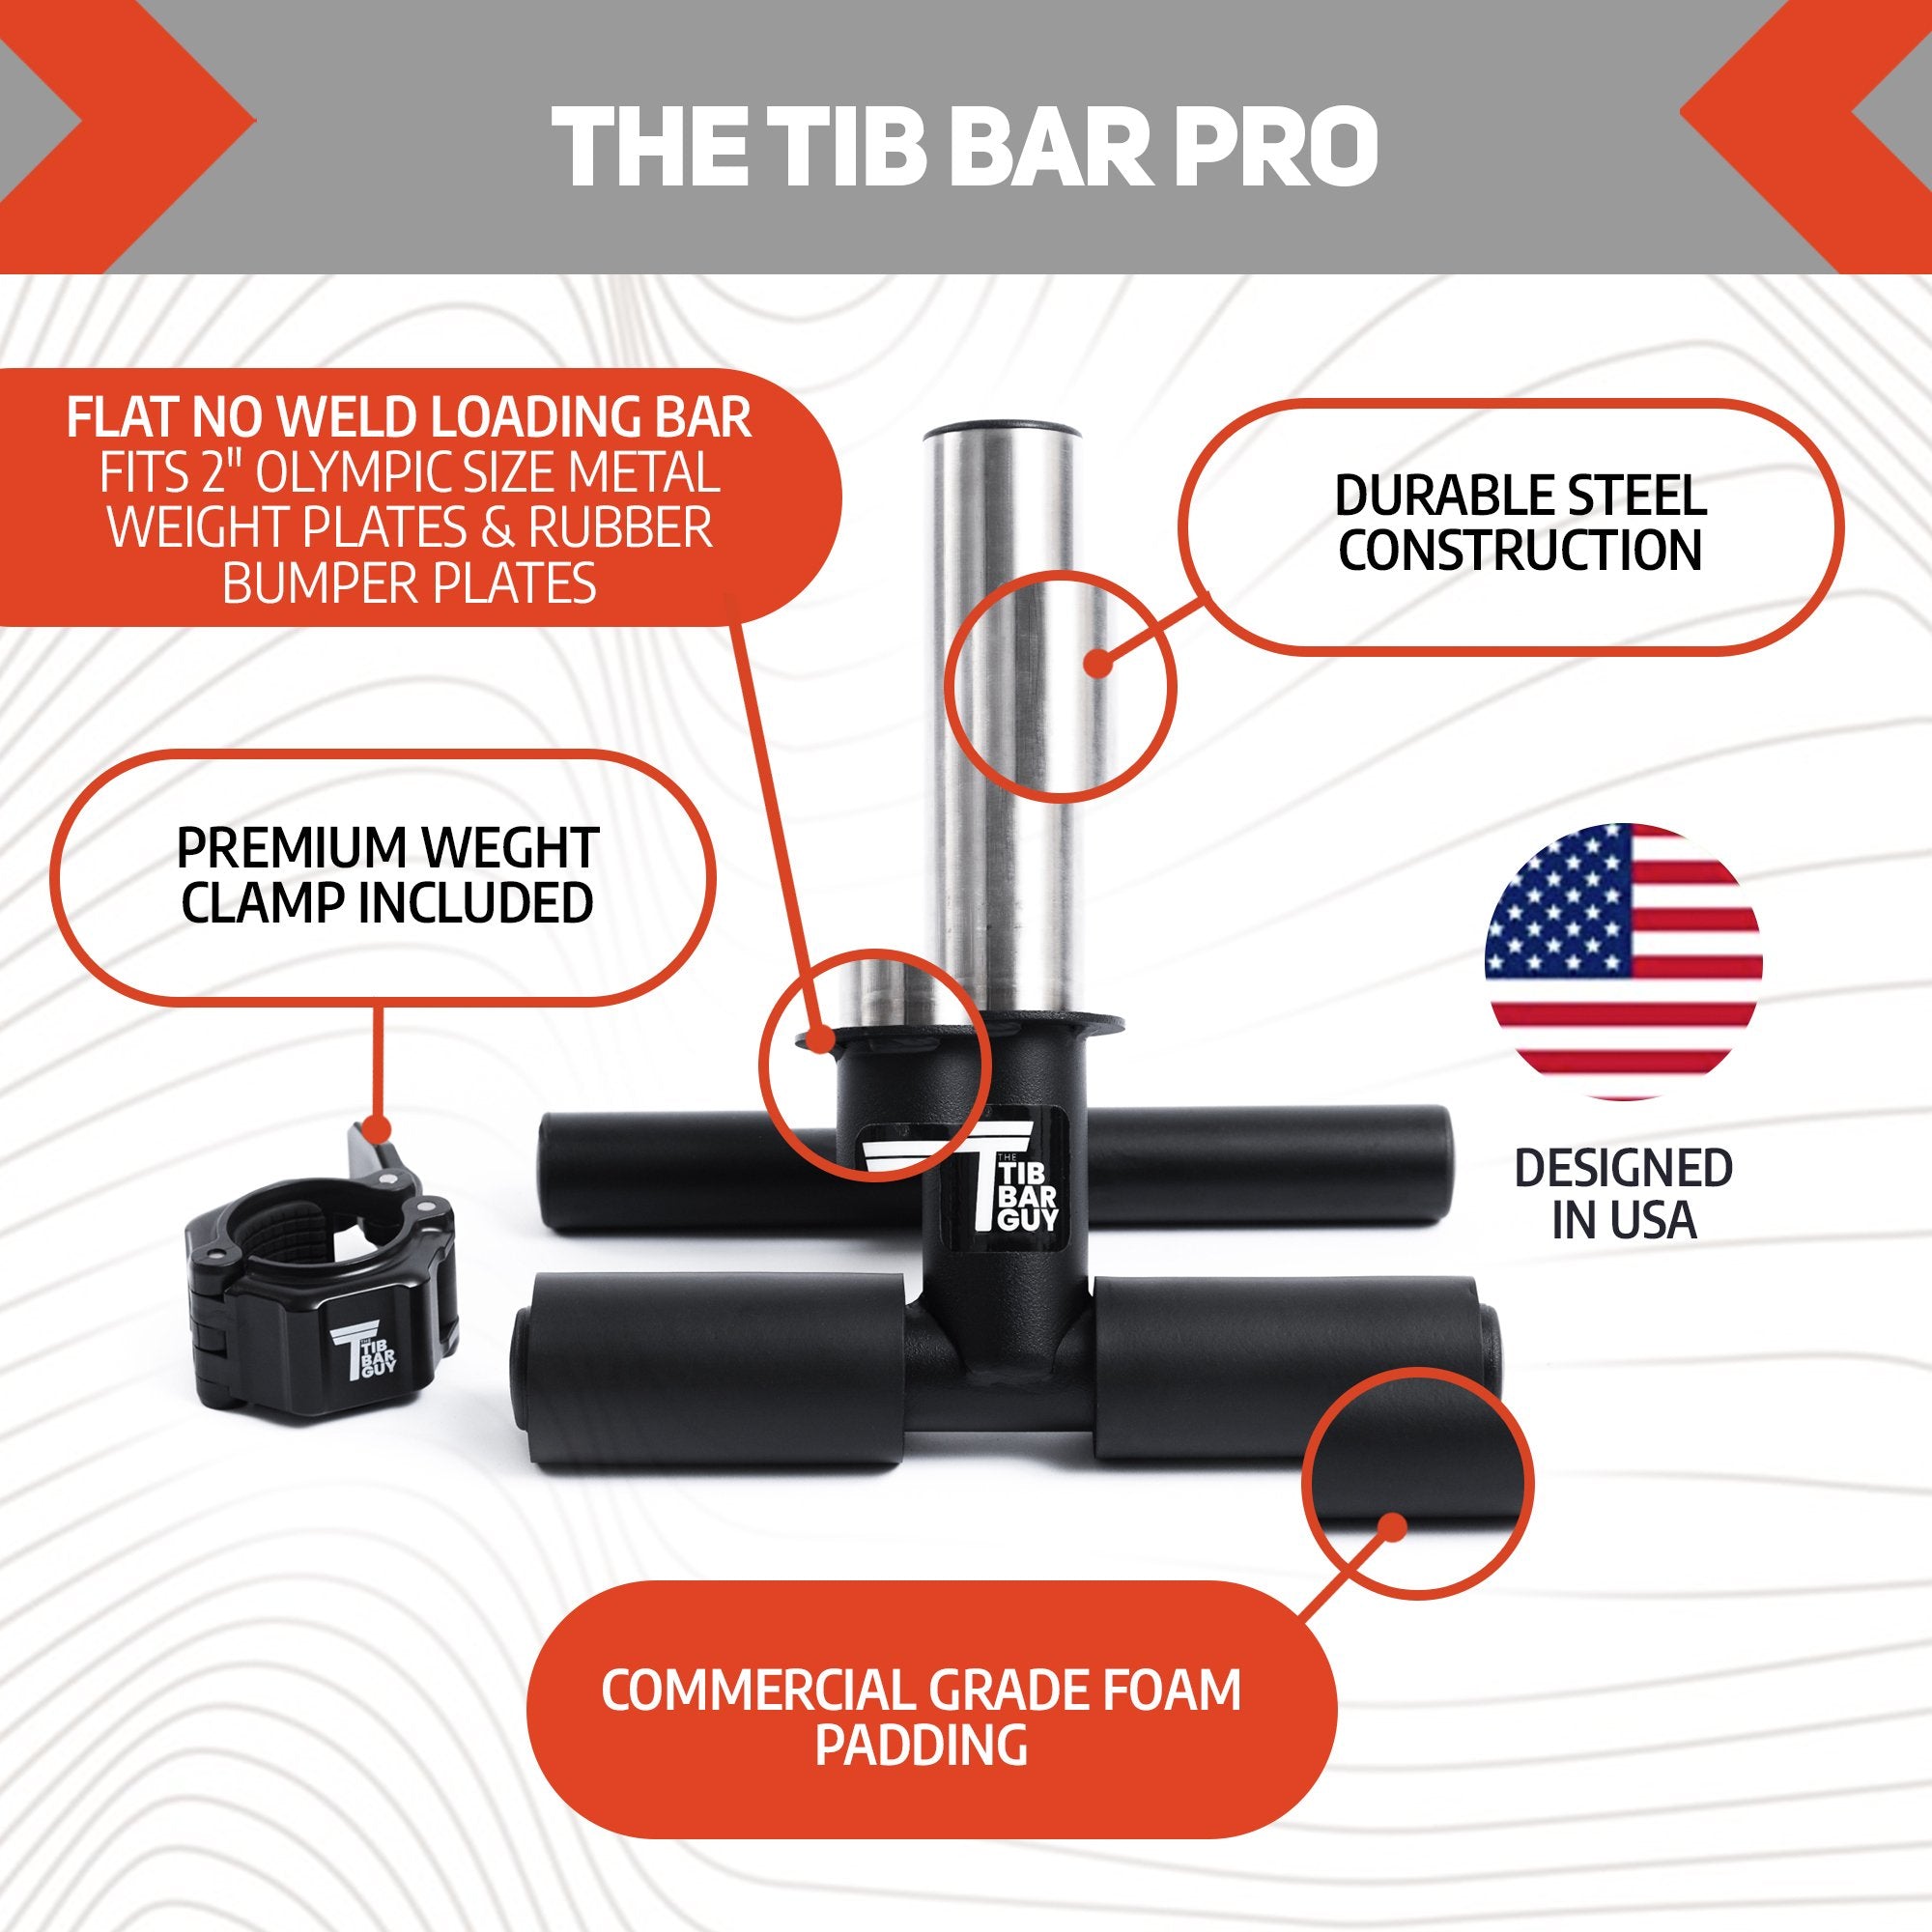 The Tib Bar Pro By The Tib Bar Guy